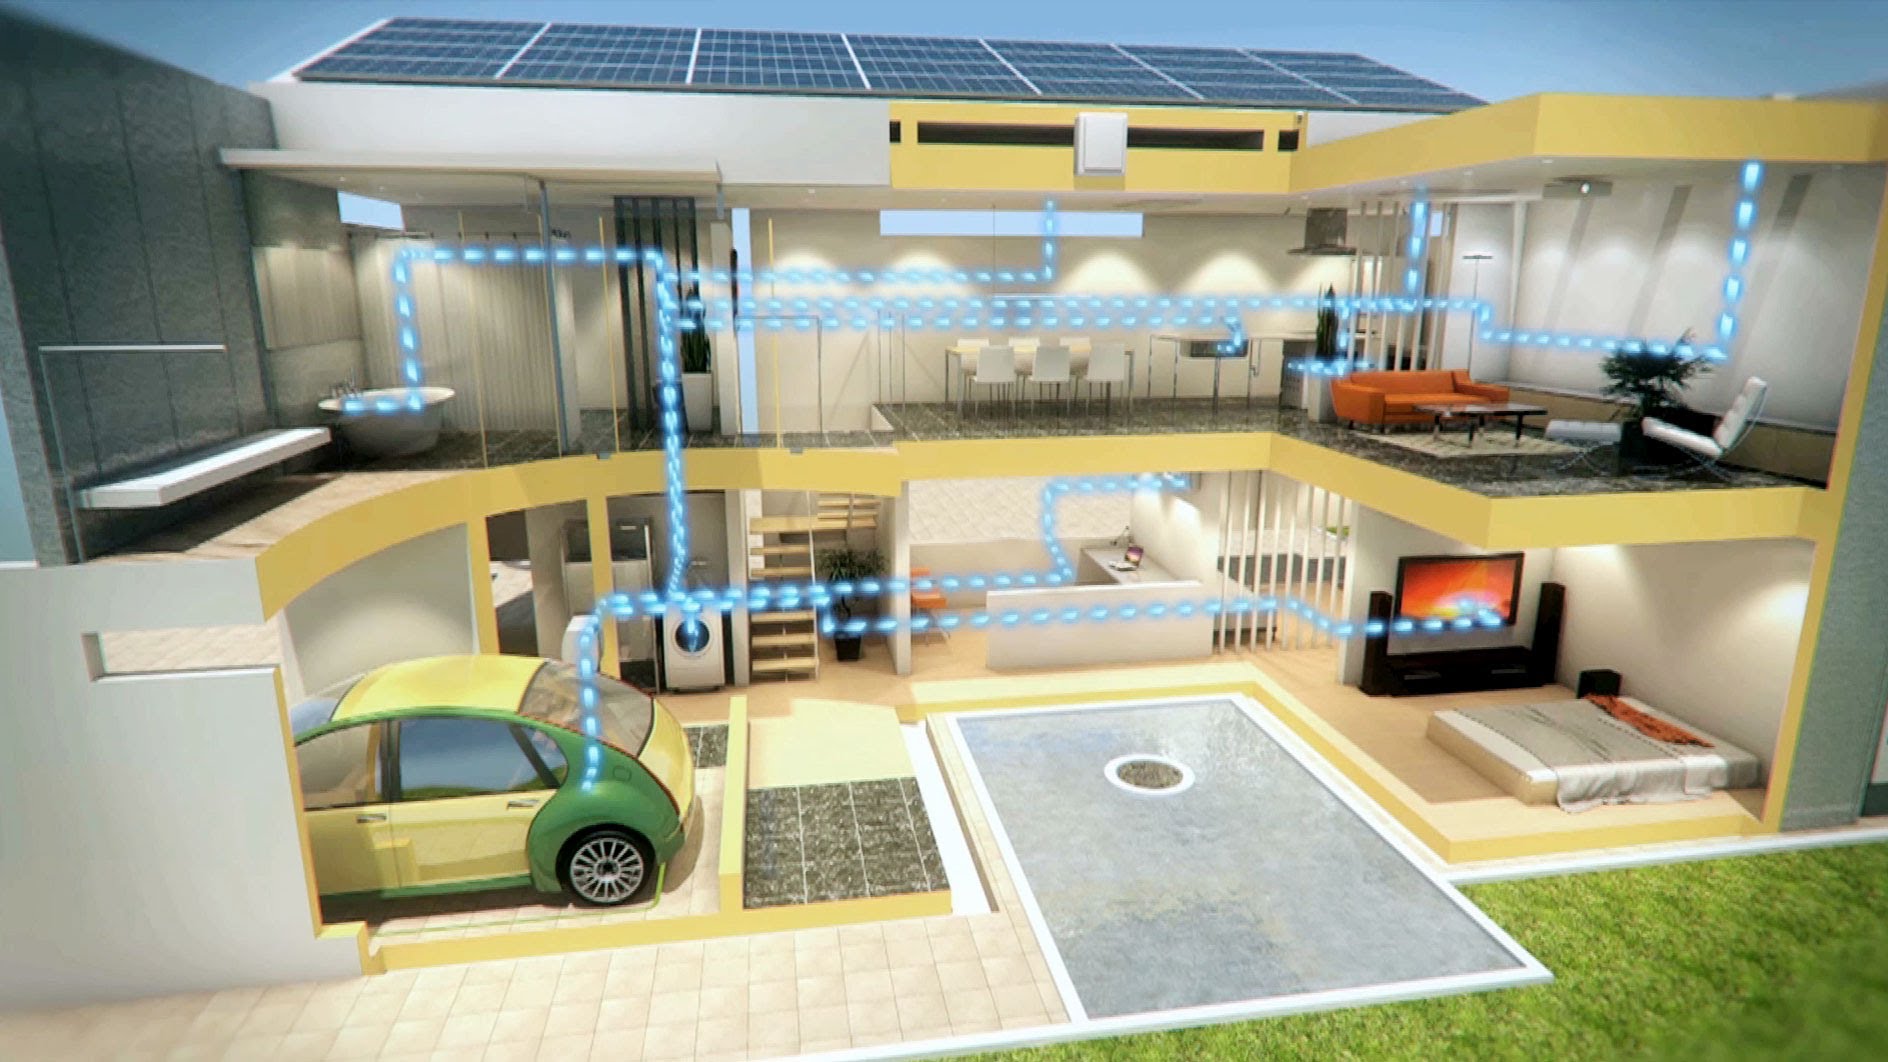 Smart Home Integrations In Modern Design